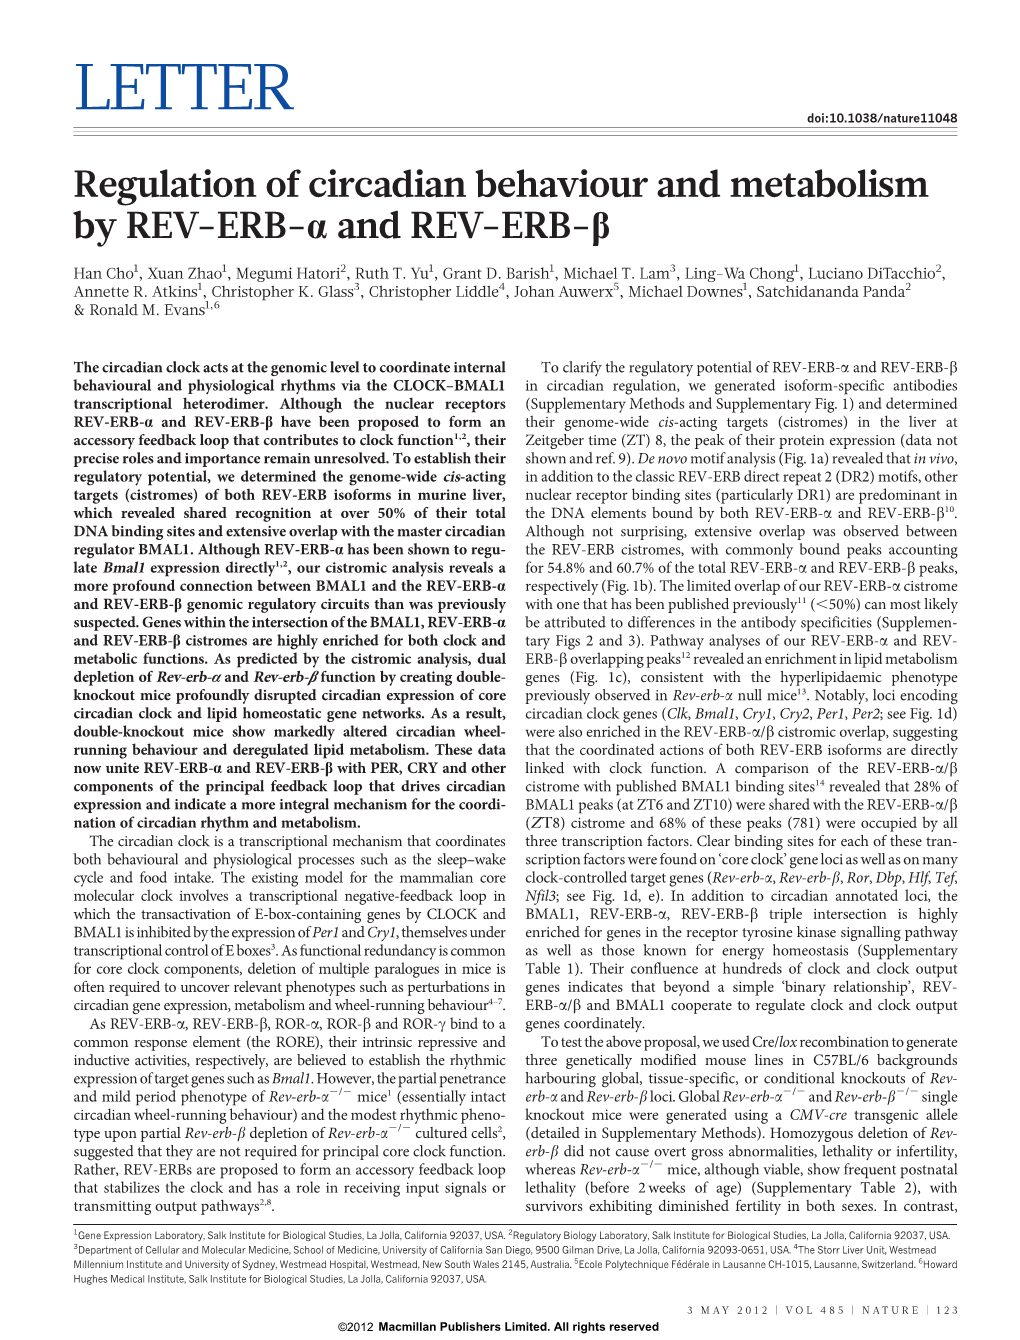 Regulation of Circadian Behaviour and Metabolism by REV-ERB-A and REV-ERB-B